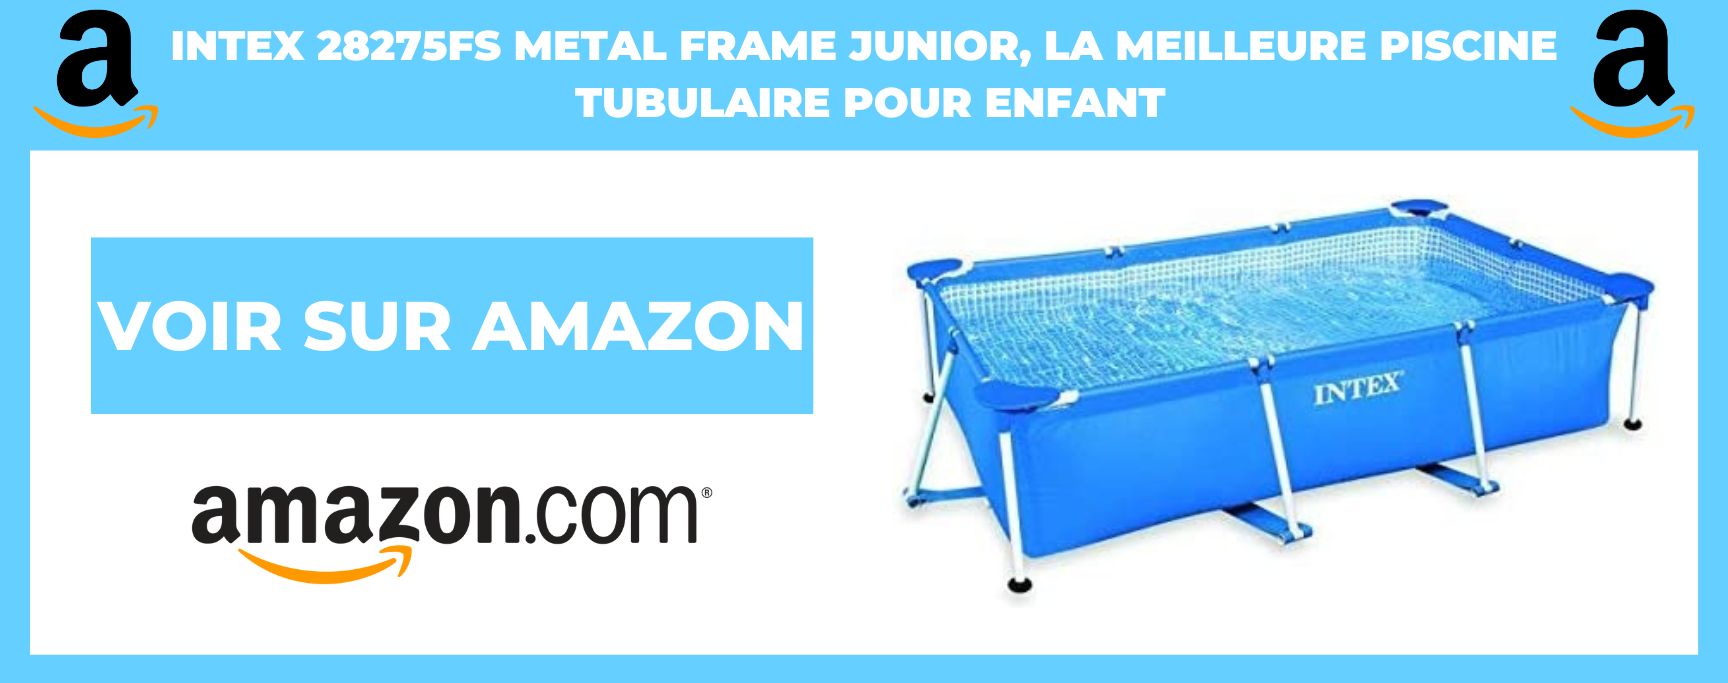 INTEX 28275FS metal frame junior